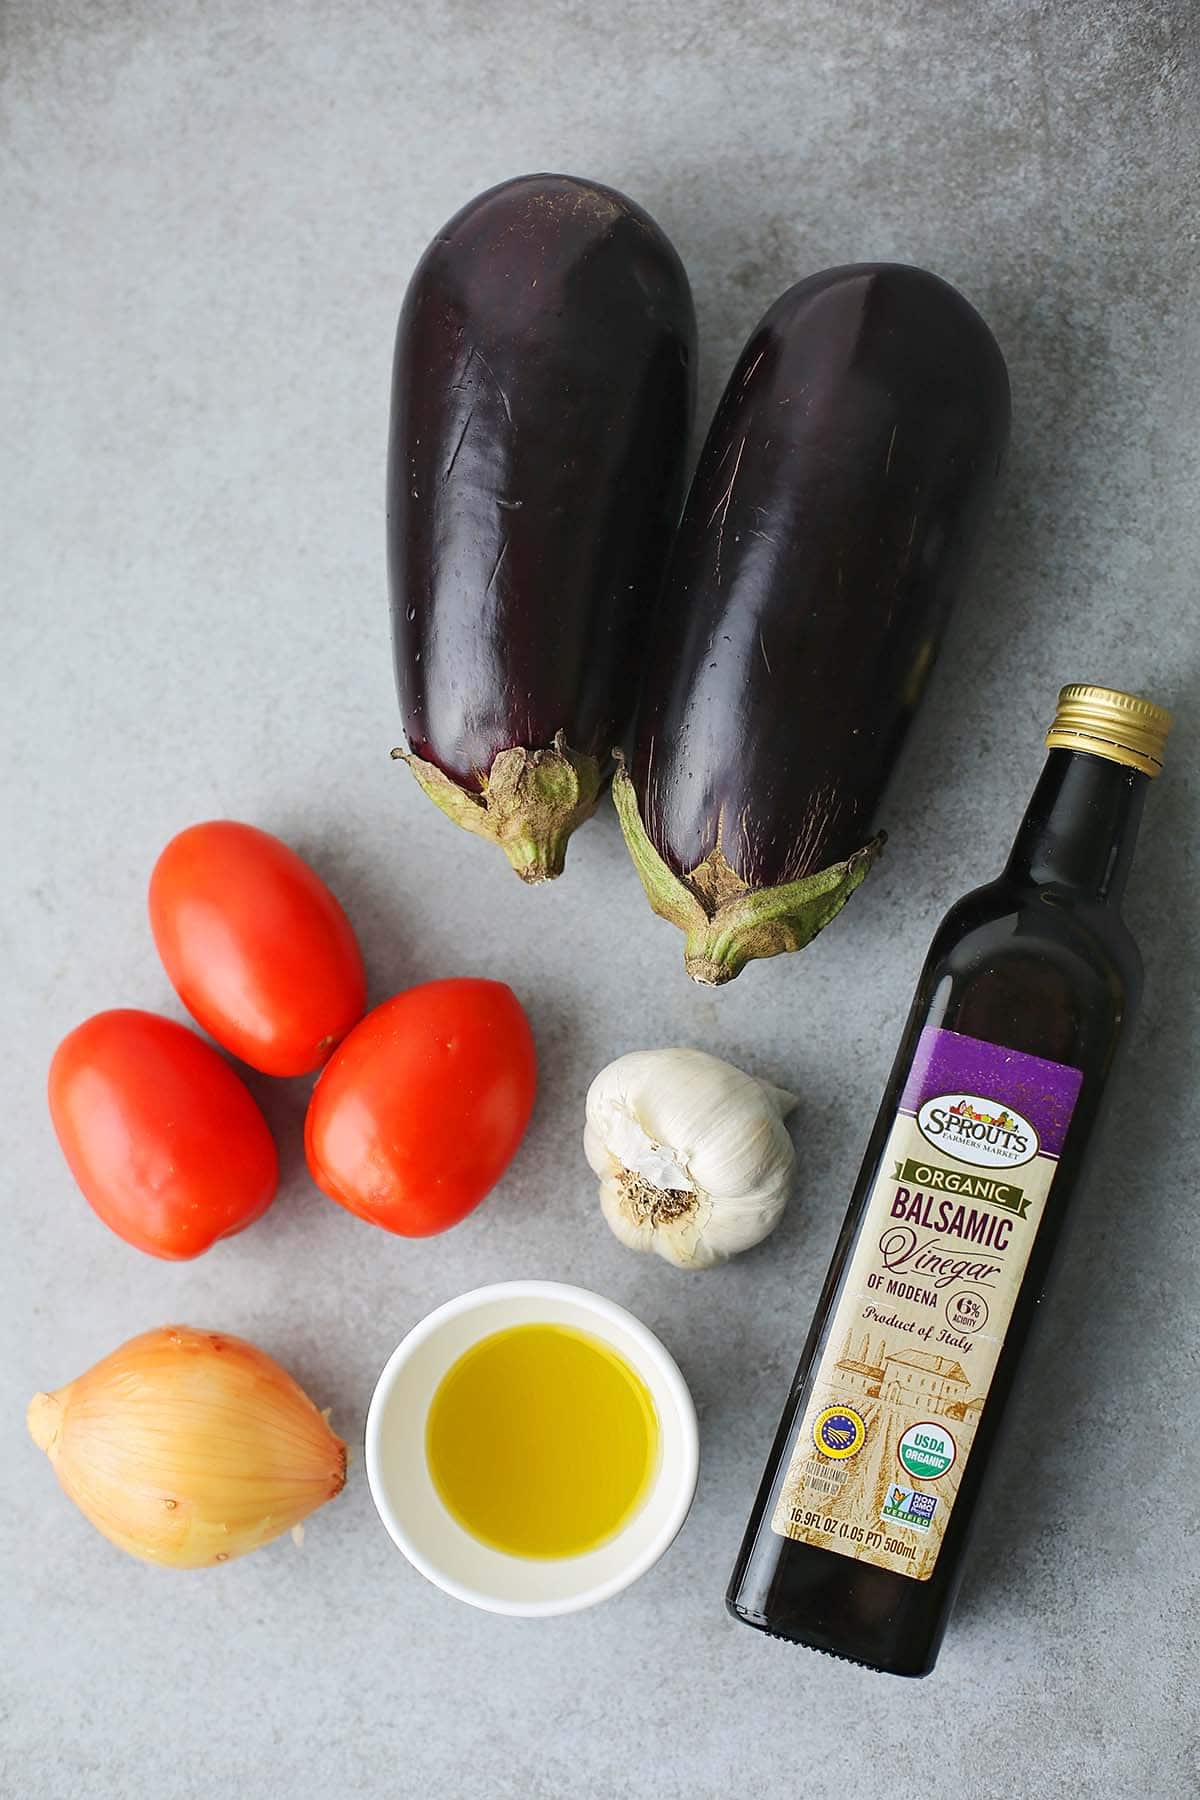 ingredients to make ikra eggplant spread: eggplants, tomatoes, onion, garlic, olive oil and balsamic vinegar.